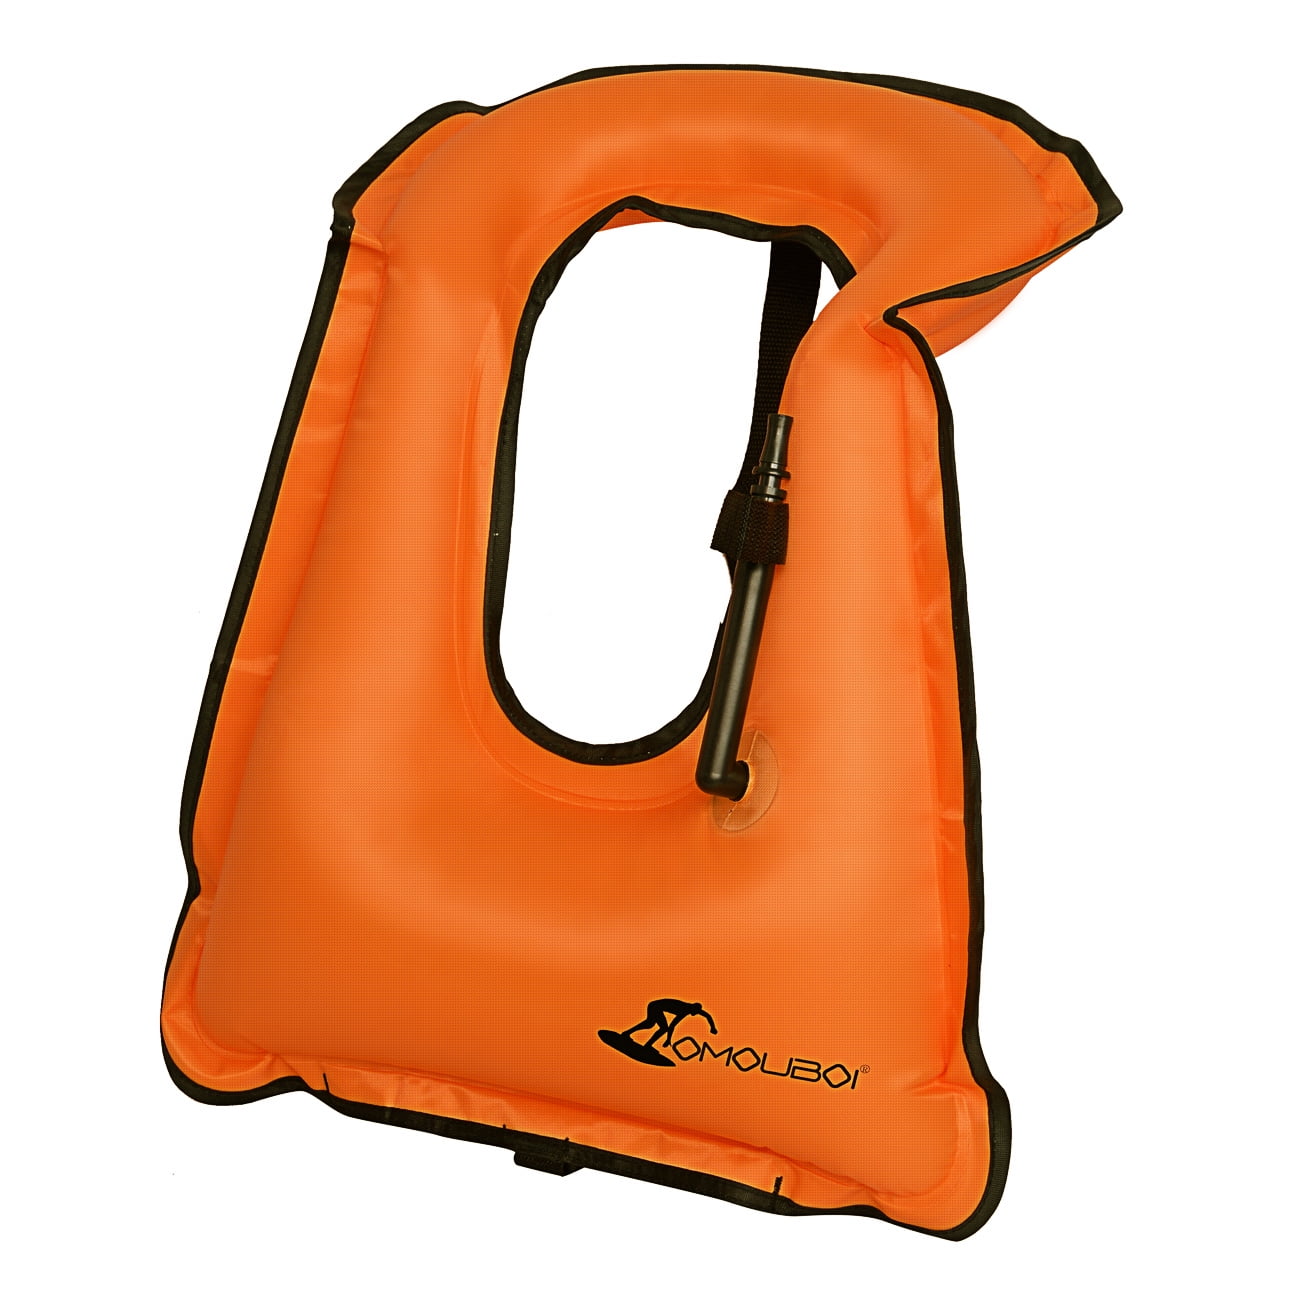 OMOUBOI Inflatable Snorkel Vest for Adults Women Men, Snorkeling ...